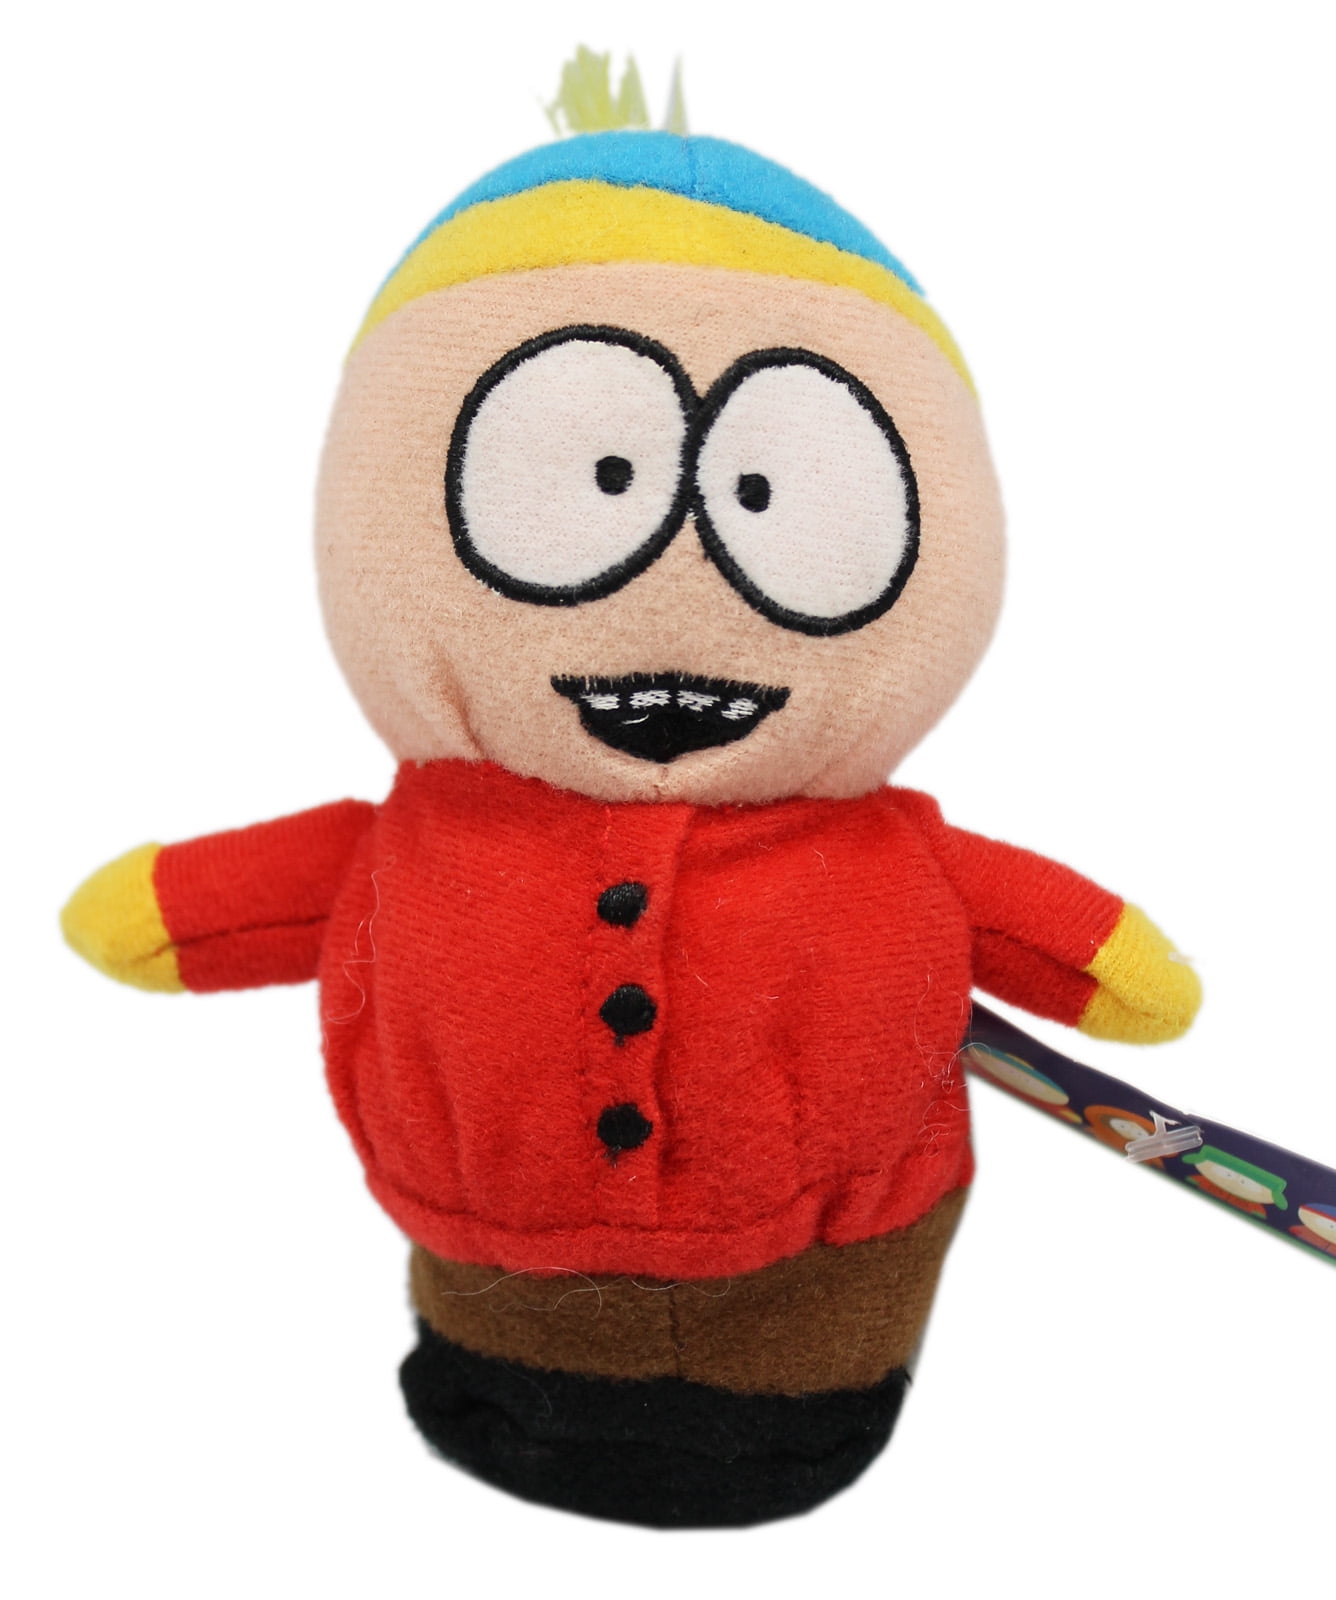 South Park Mini Eric Cartman Plush Toy (6in) - Walmart.com